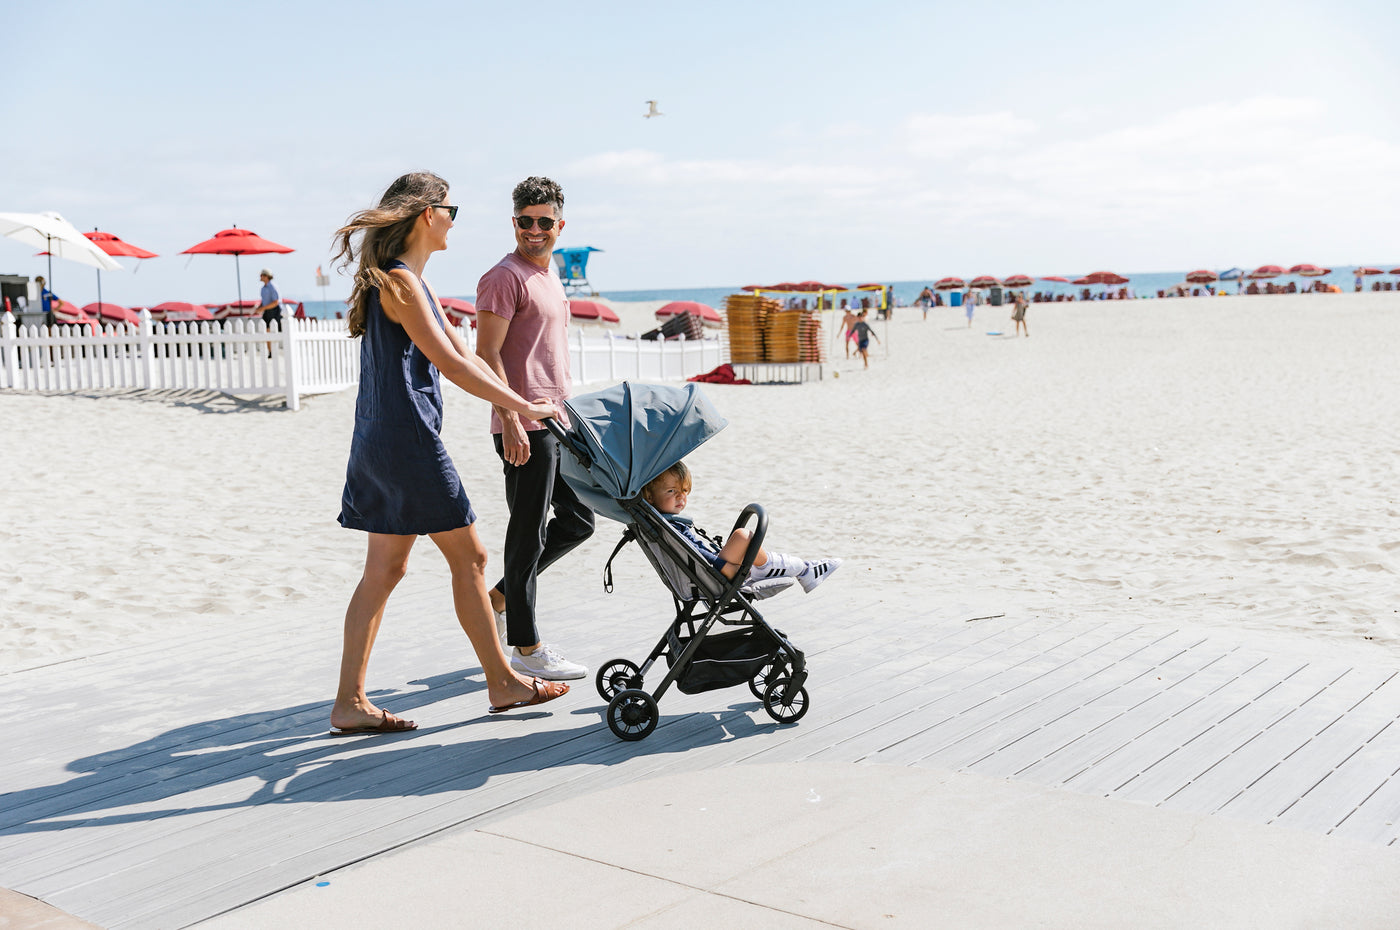 NEW IN BOX Inglesina Quid 2 Lightweight Travel Baby Safe Compact Stroller  Black